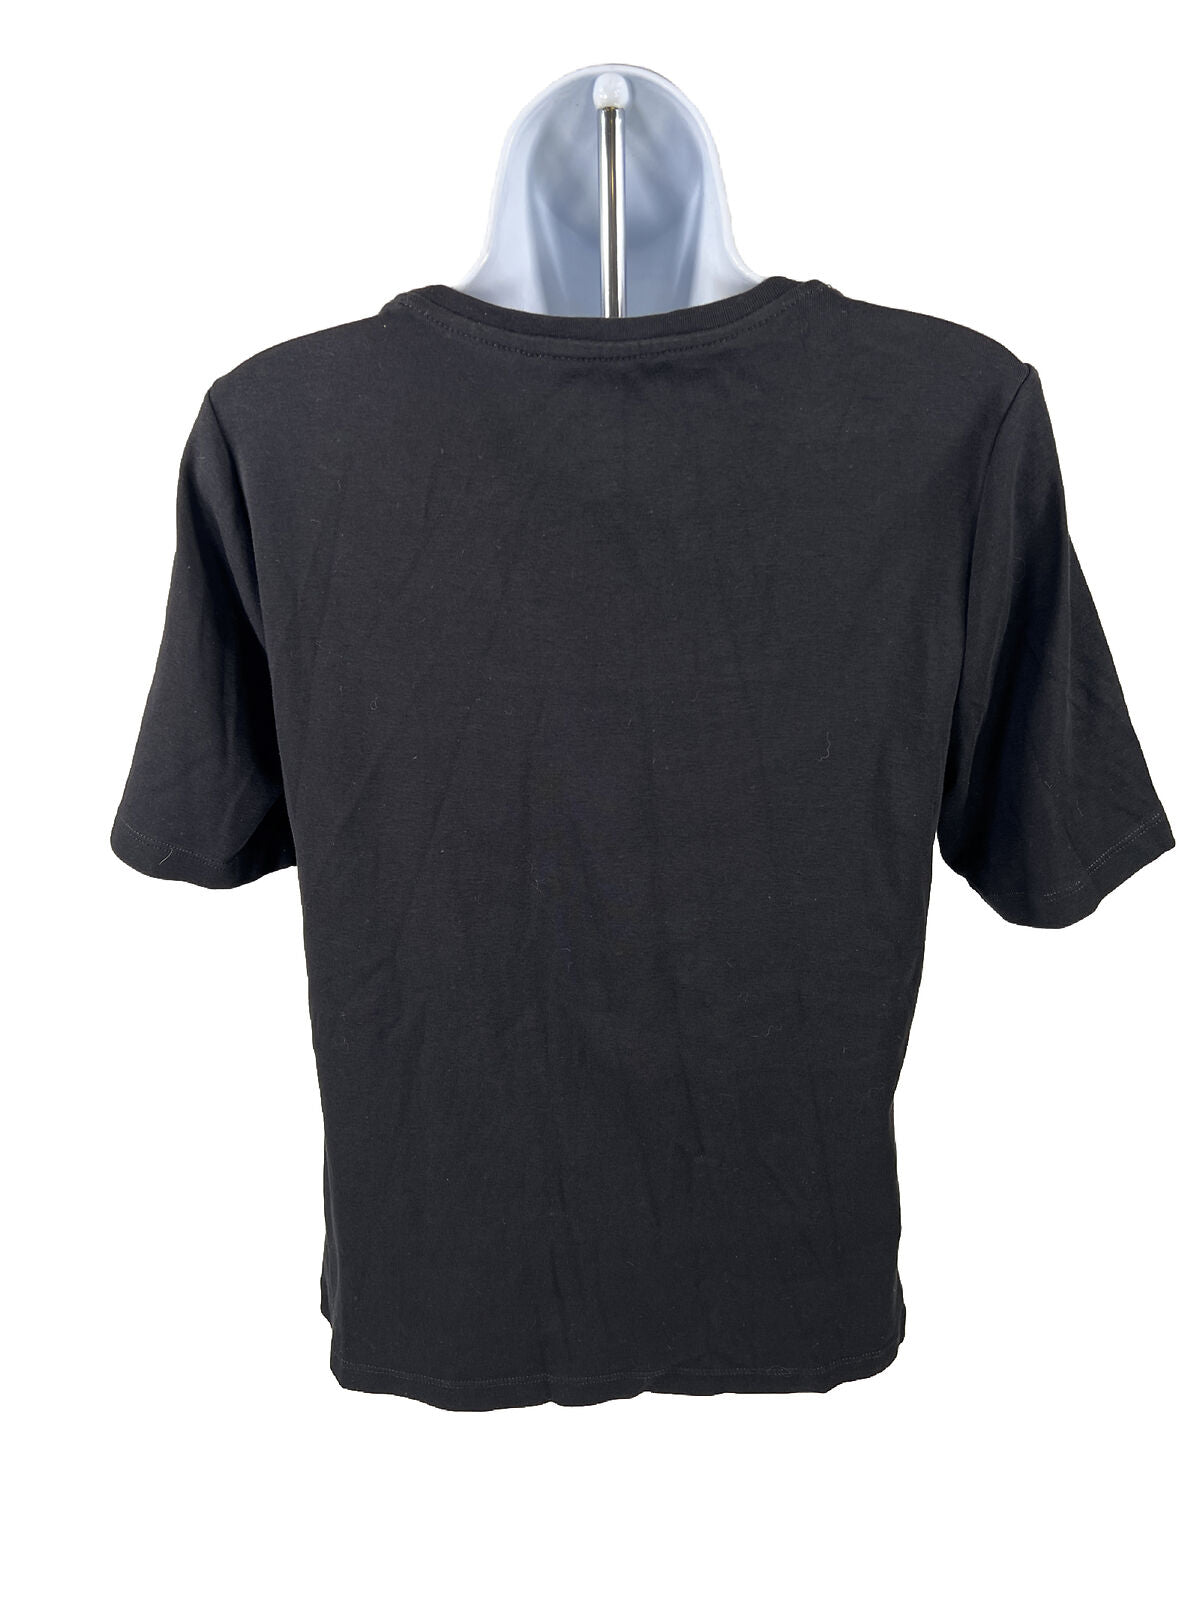 Chico's Women's Black Short Sleeve Cotton T-Shirt - 1/US M